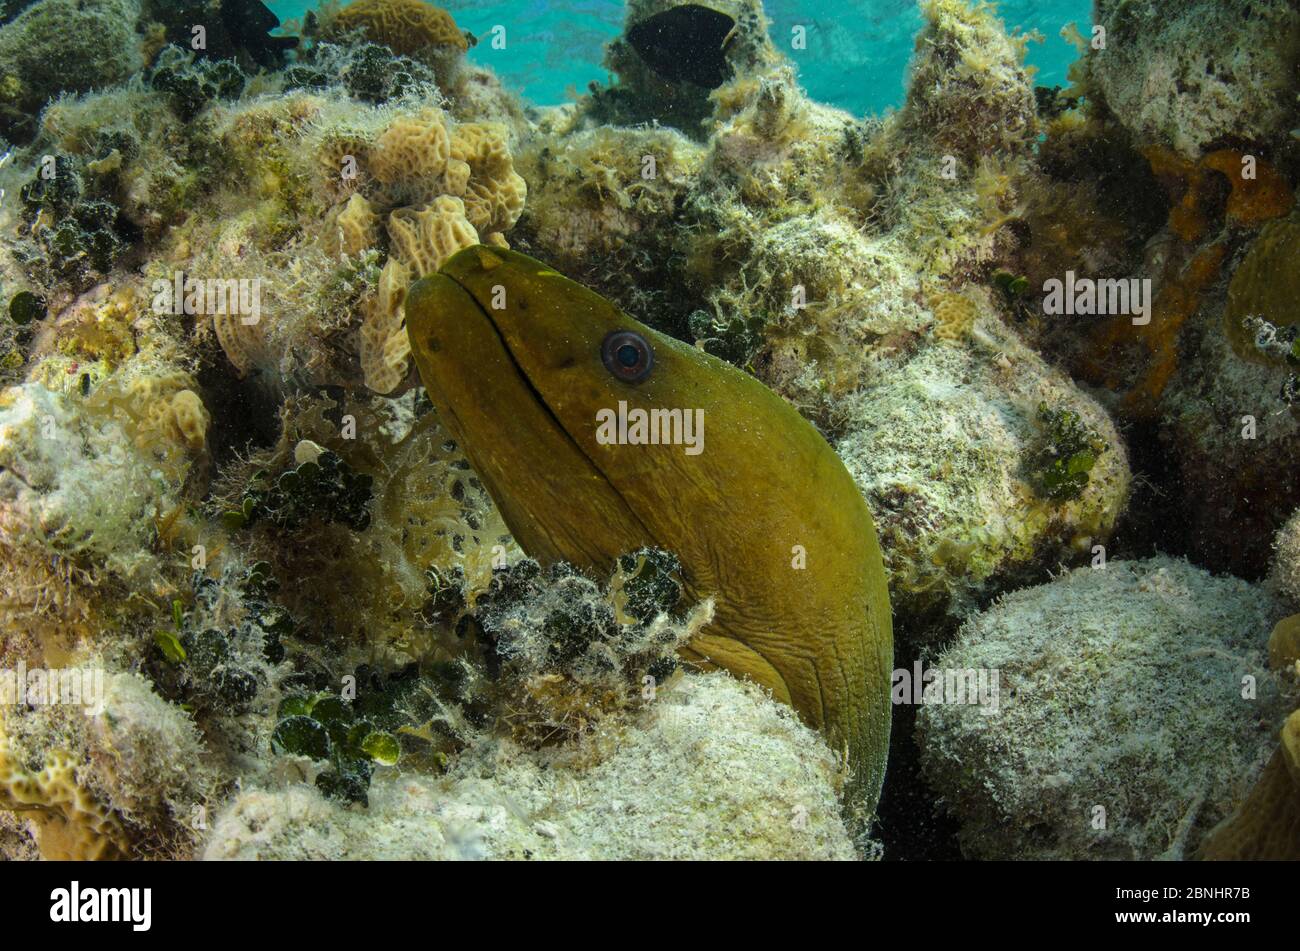 Grüner Muränen (Gymnothorax funebris) Lighthouse Reef Atoll, Belize. Stockfoto